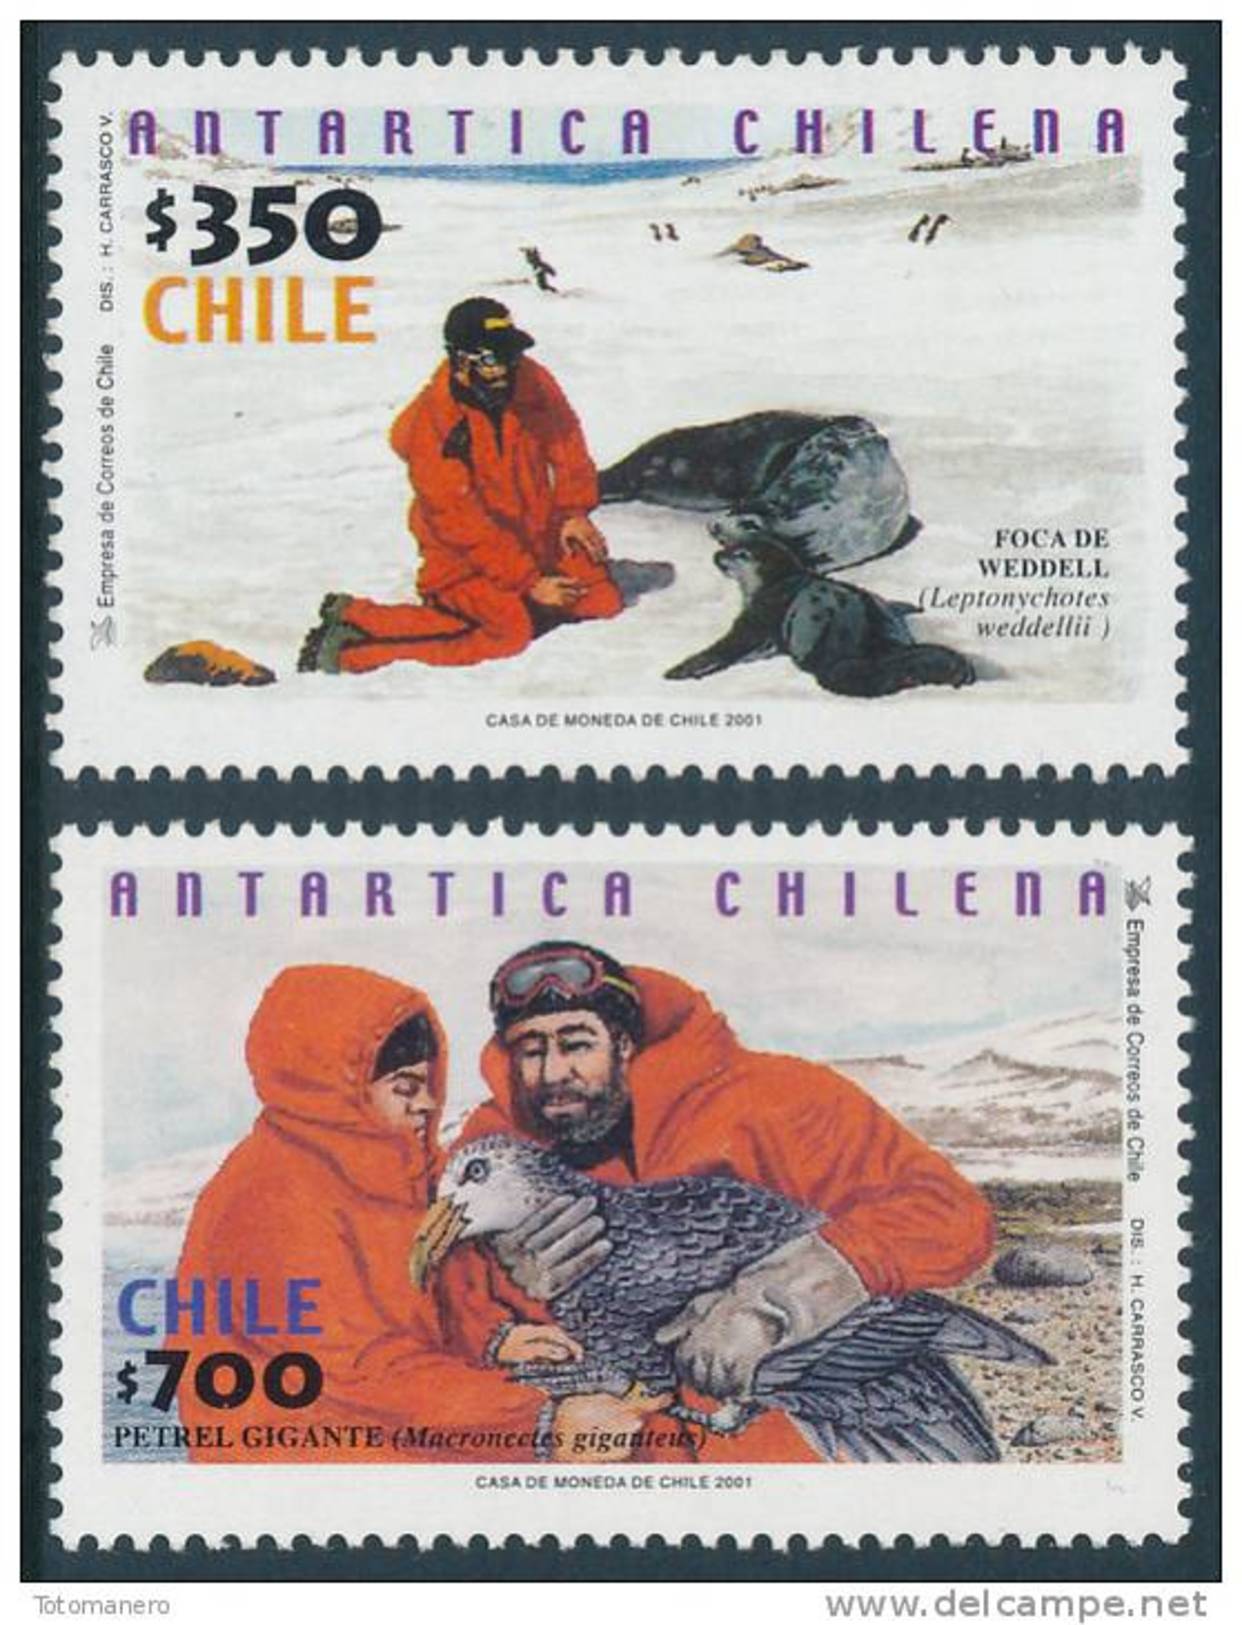 CHILE 2001 ANTARTICA CHILENA Foca De Weddel & Petrel Gigante Set Of 2v** - Fauna Antártica